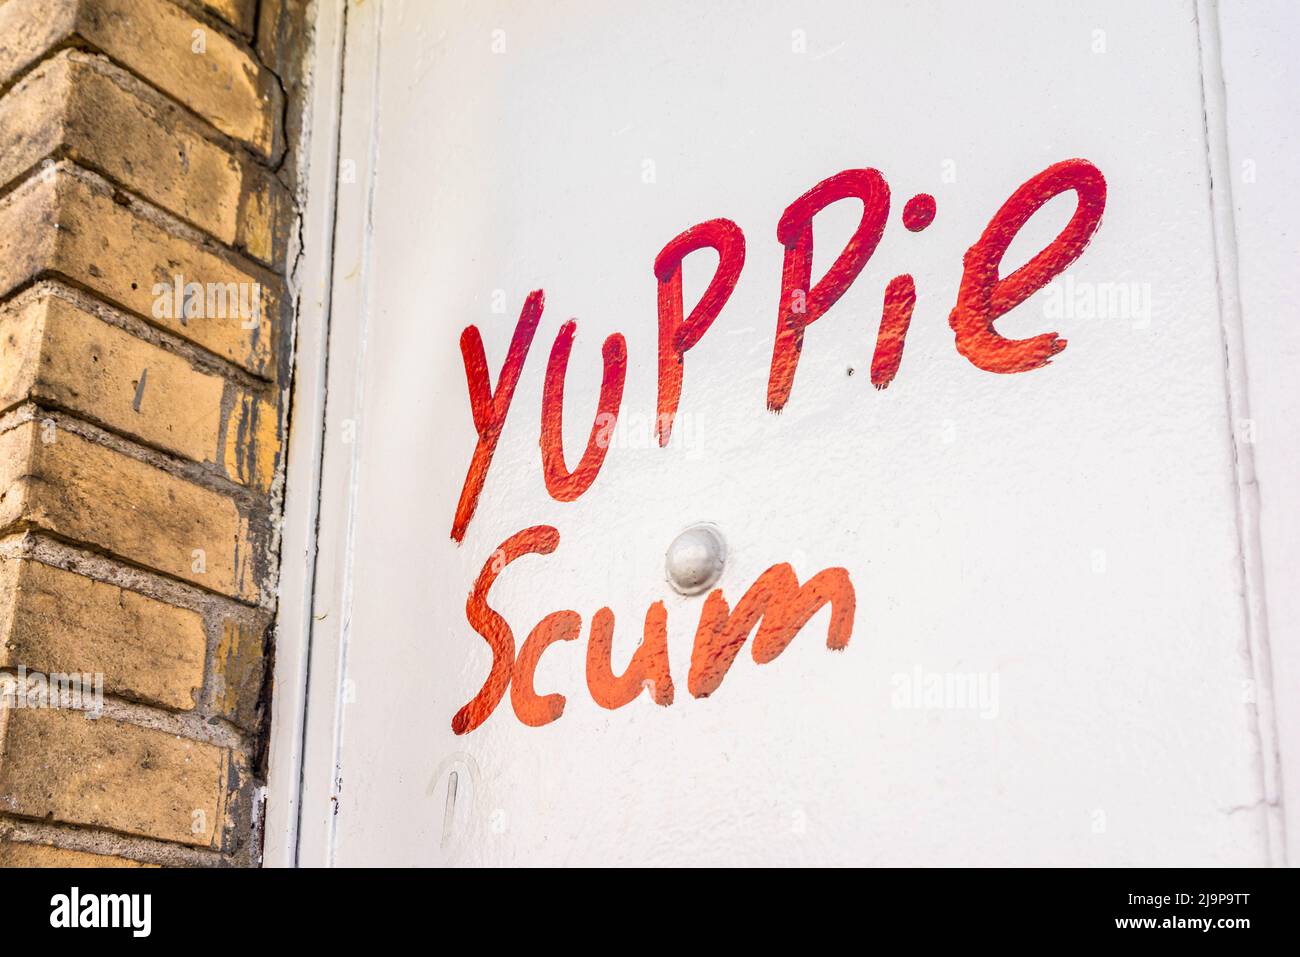 Yuppie scum graffiti in red letters on a door in Berlin, Germany, Europe Stock Photo